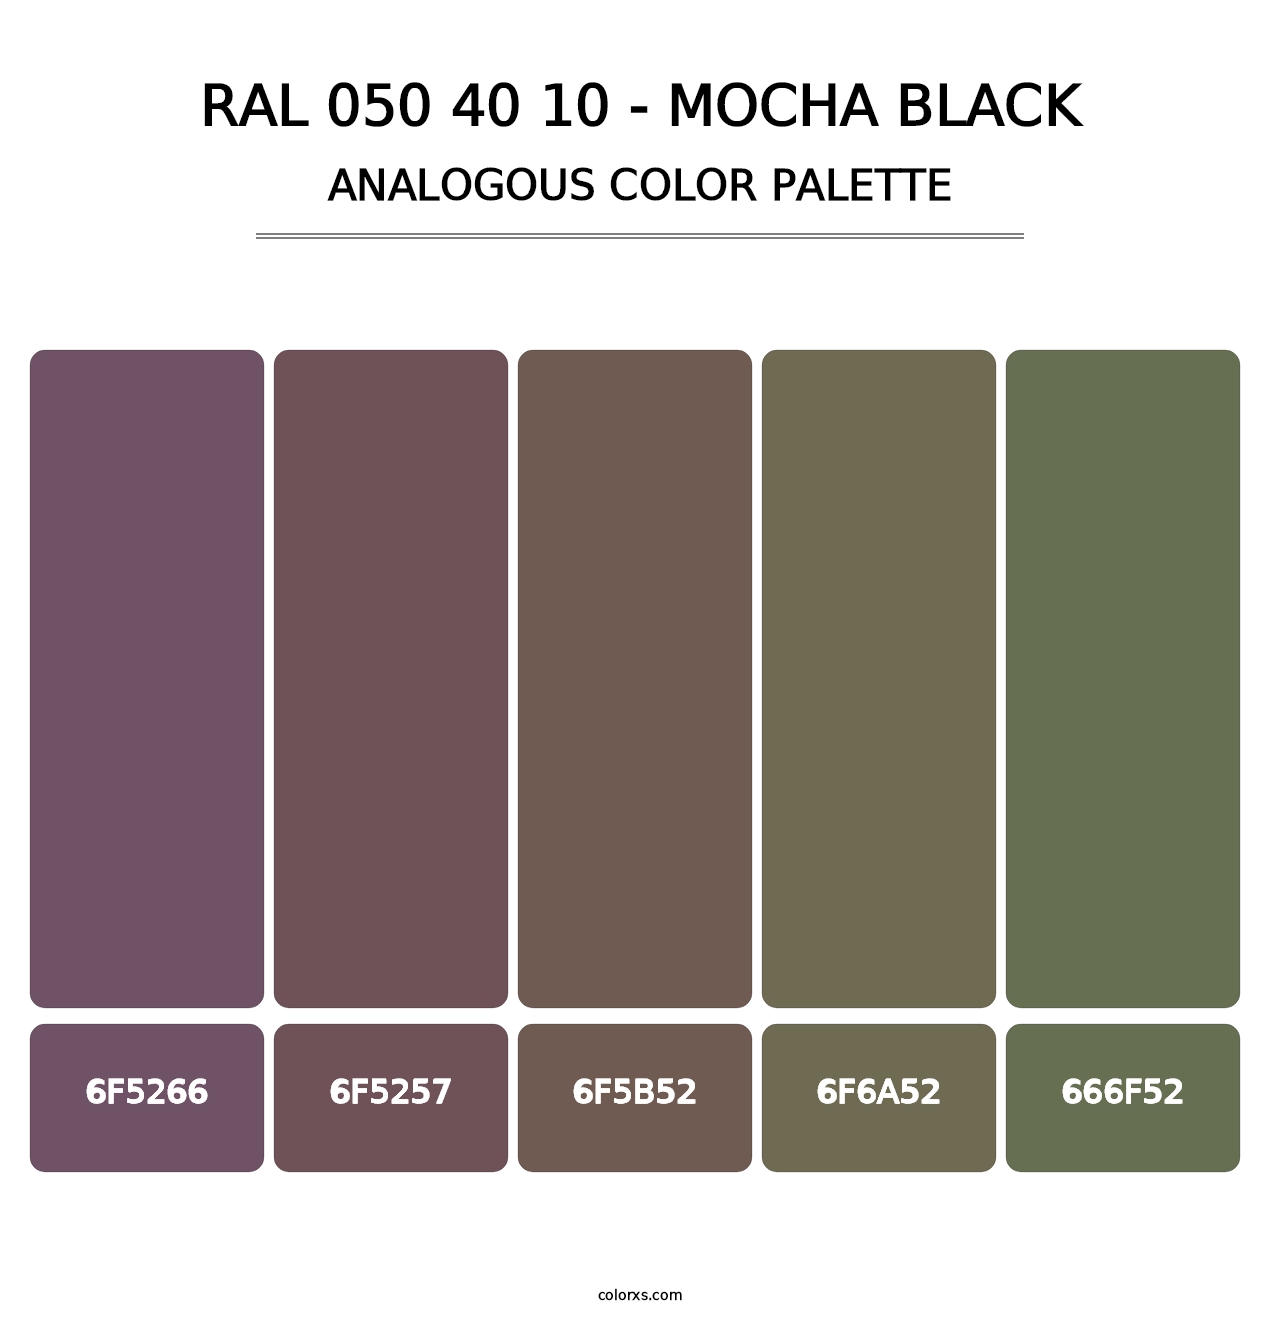 RAL 050 40 10 - Mocha Black - Analogous Color Palette